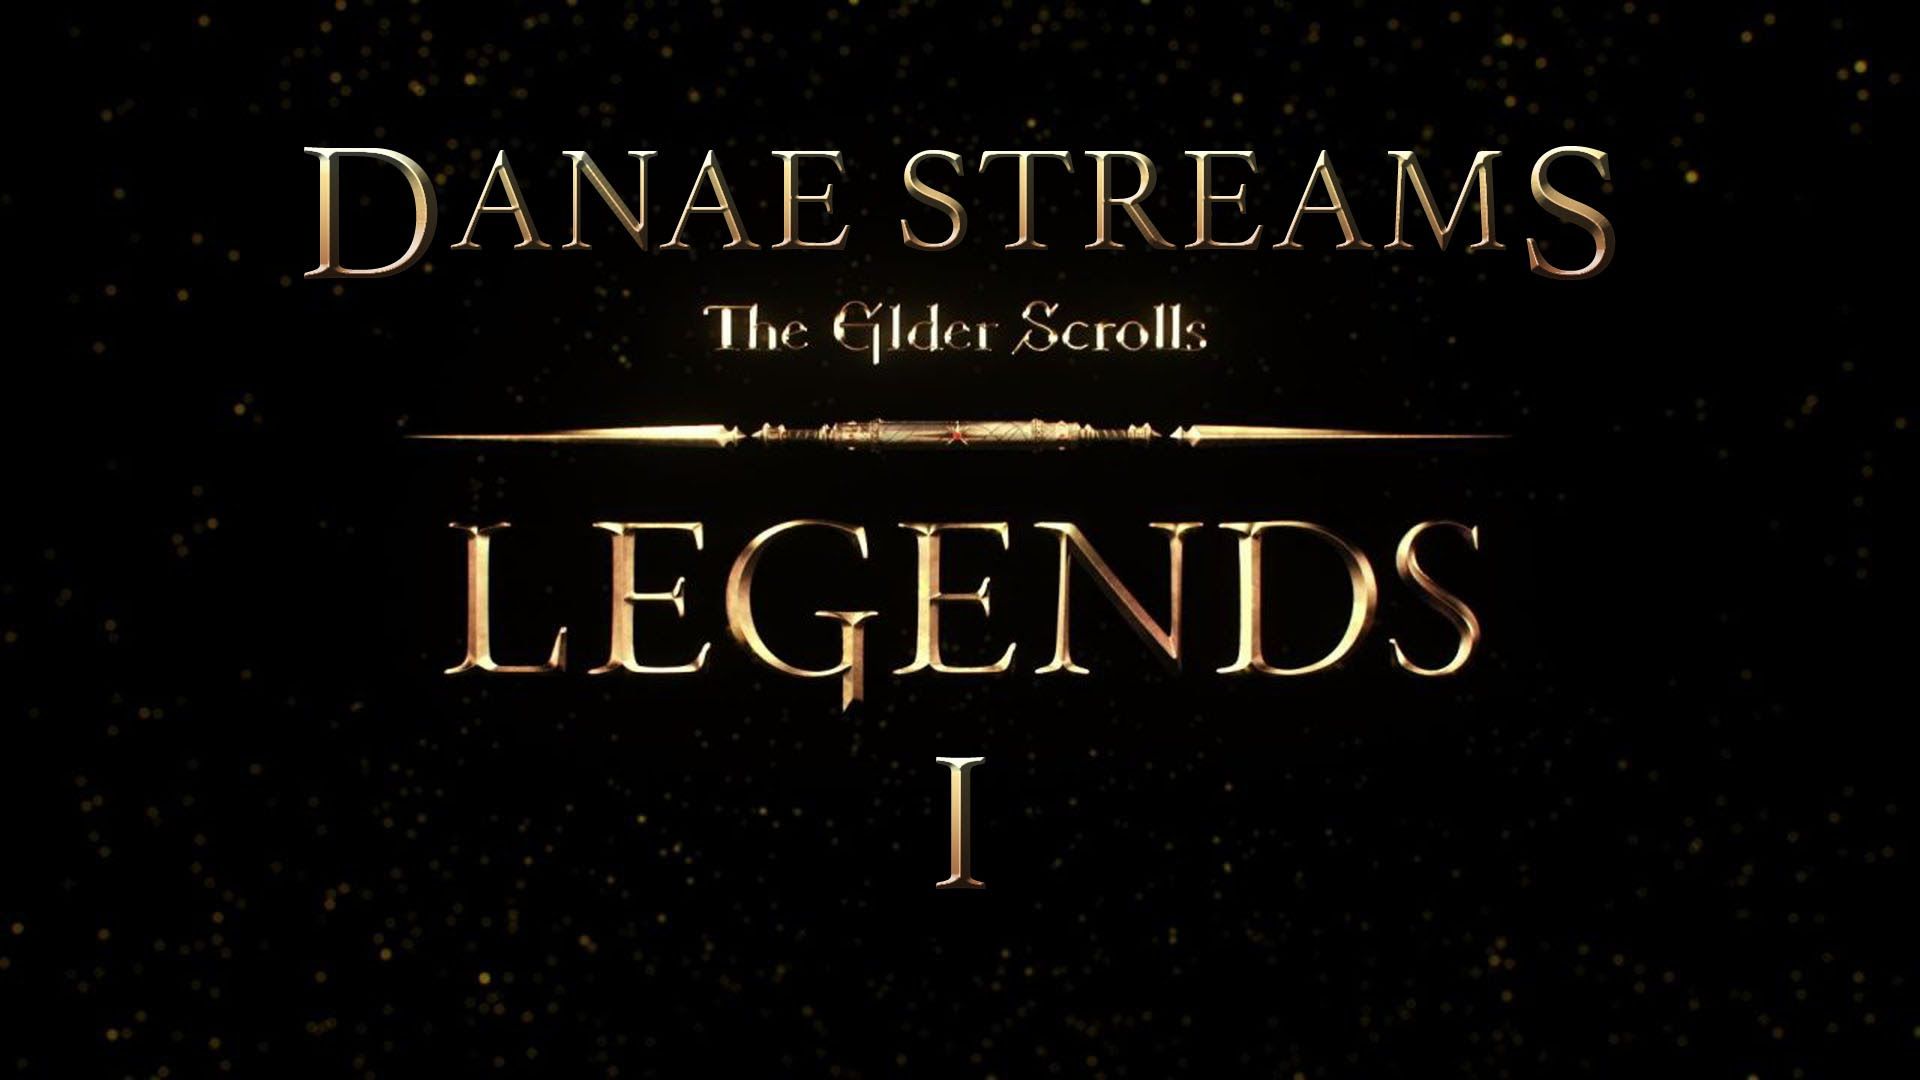 Let's Play: The Elder Scrolls: Legends